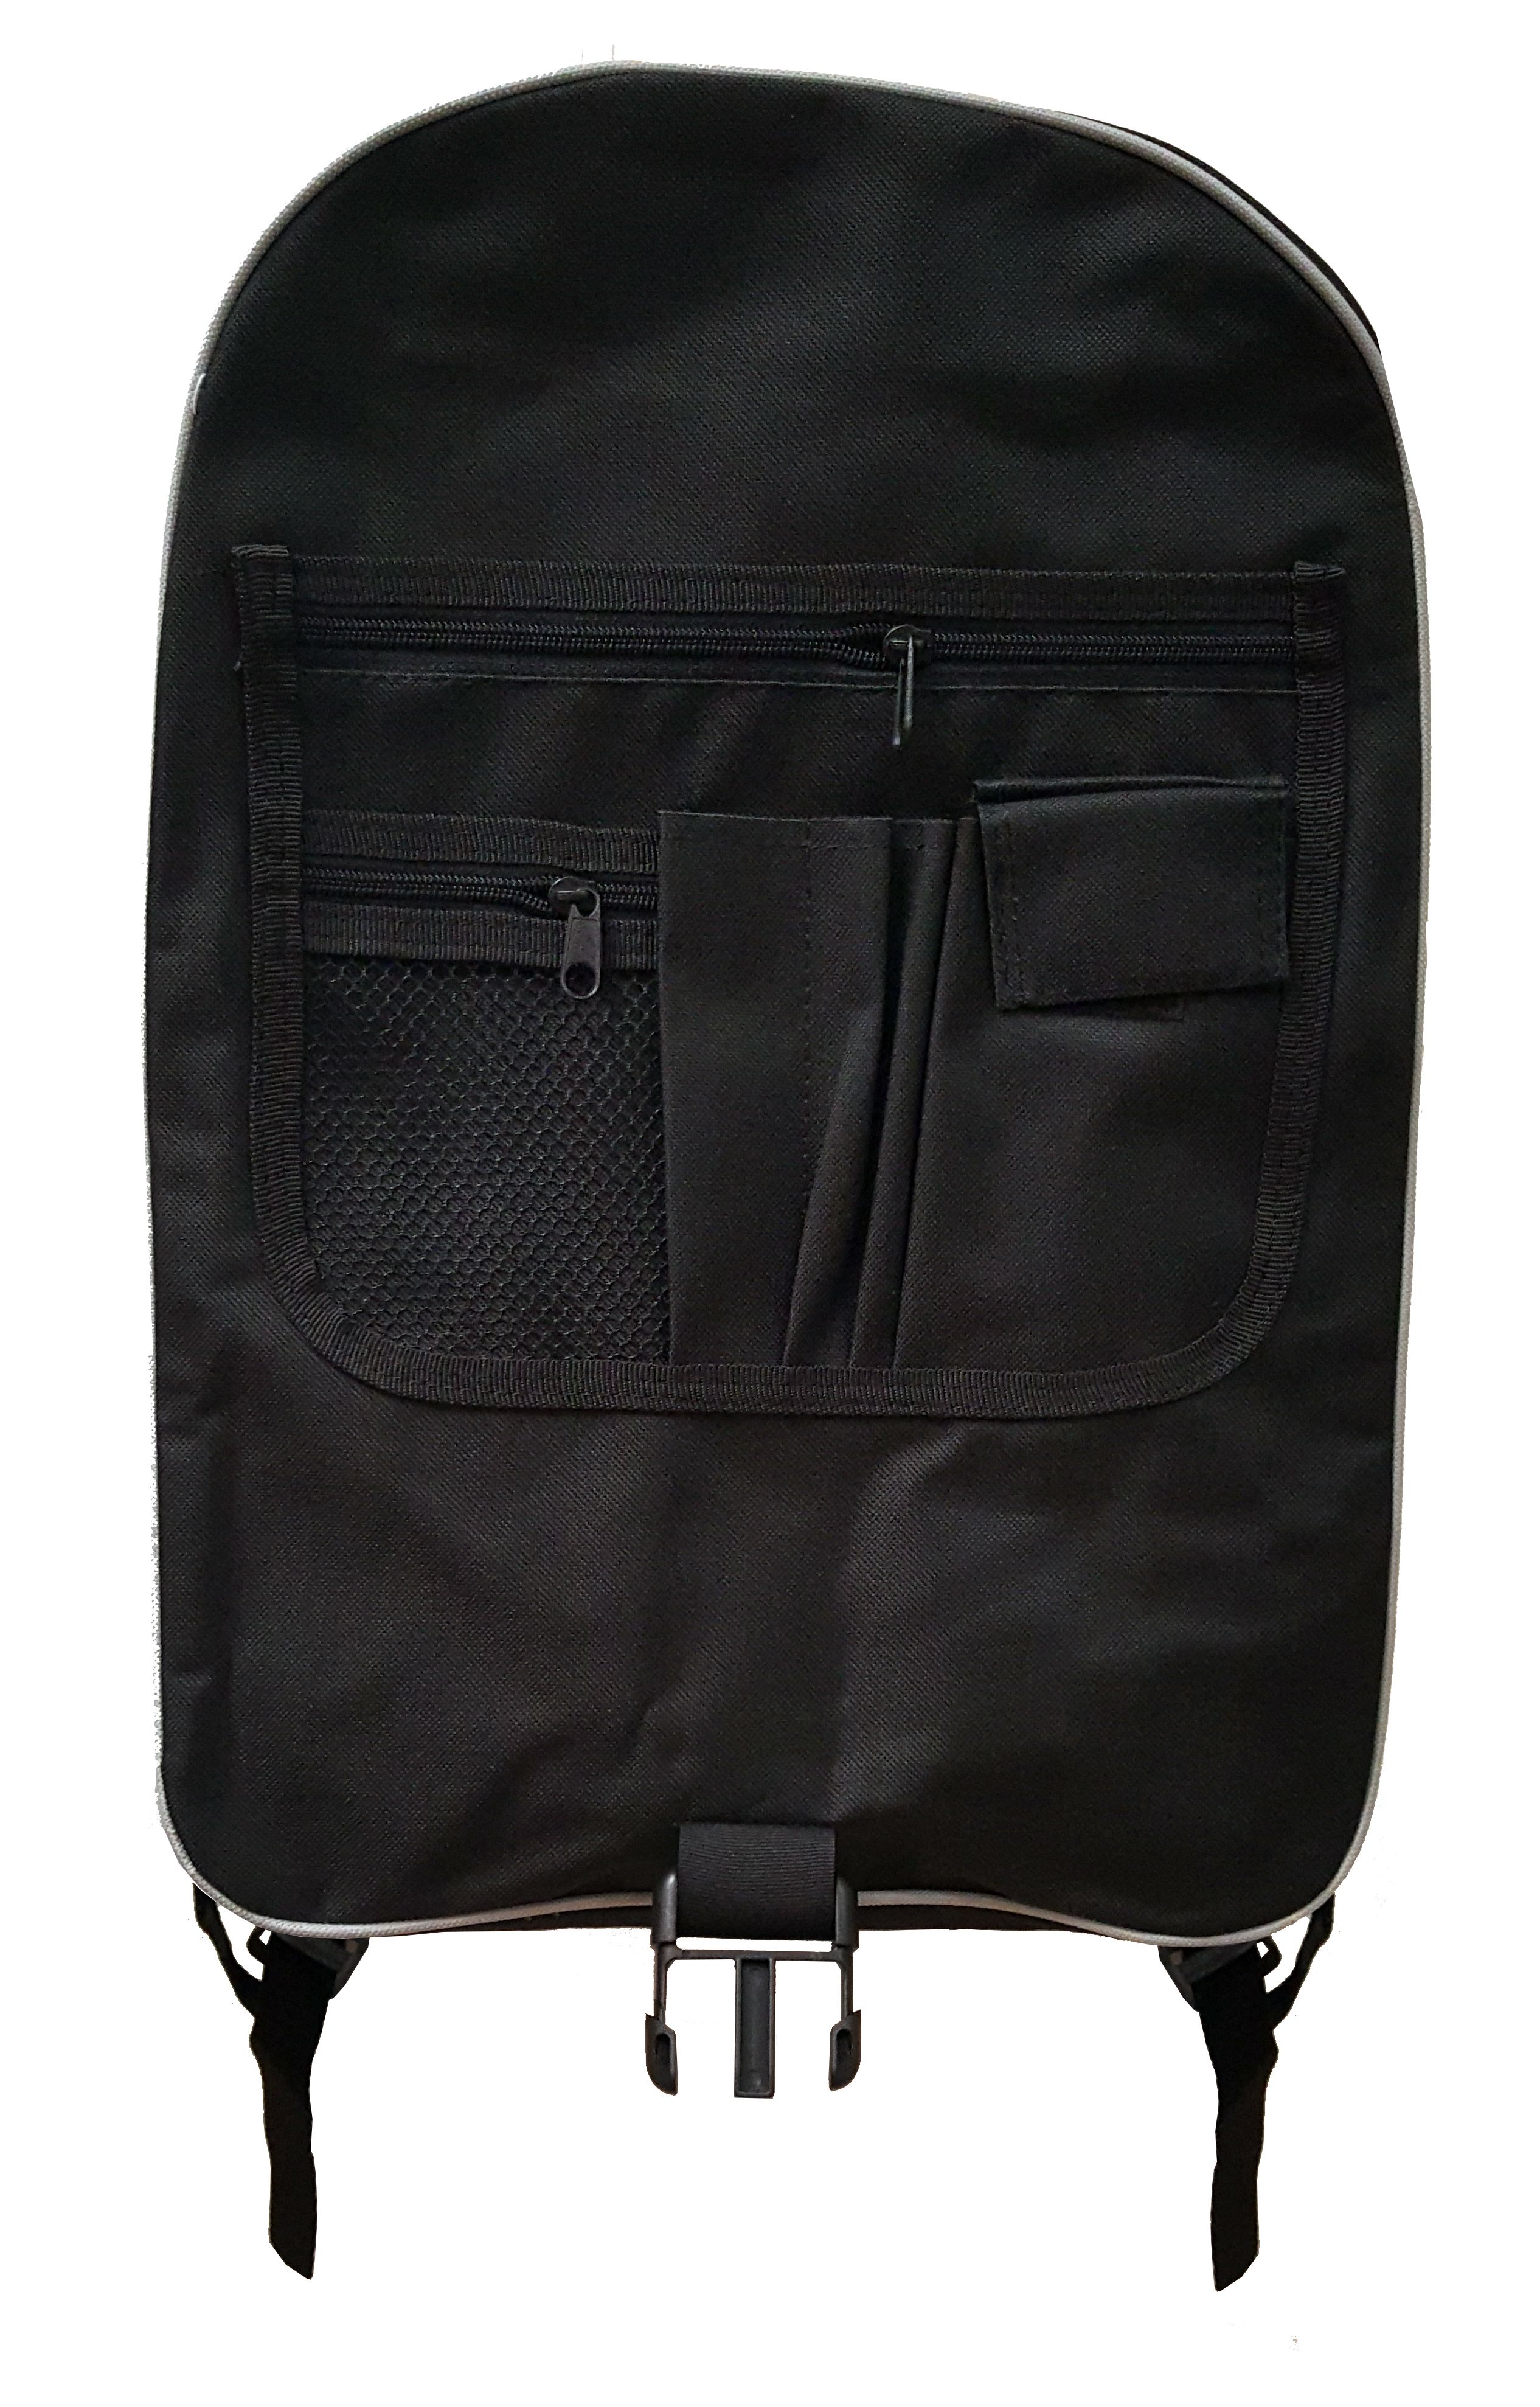 School Backpacks Variety in Black - Choose From 24 Options - image 2 of 3